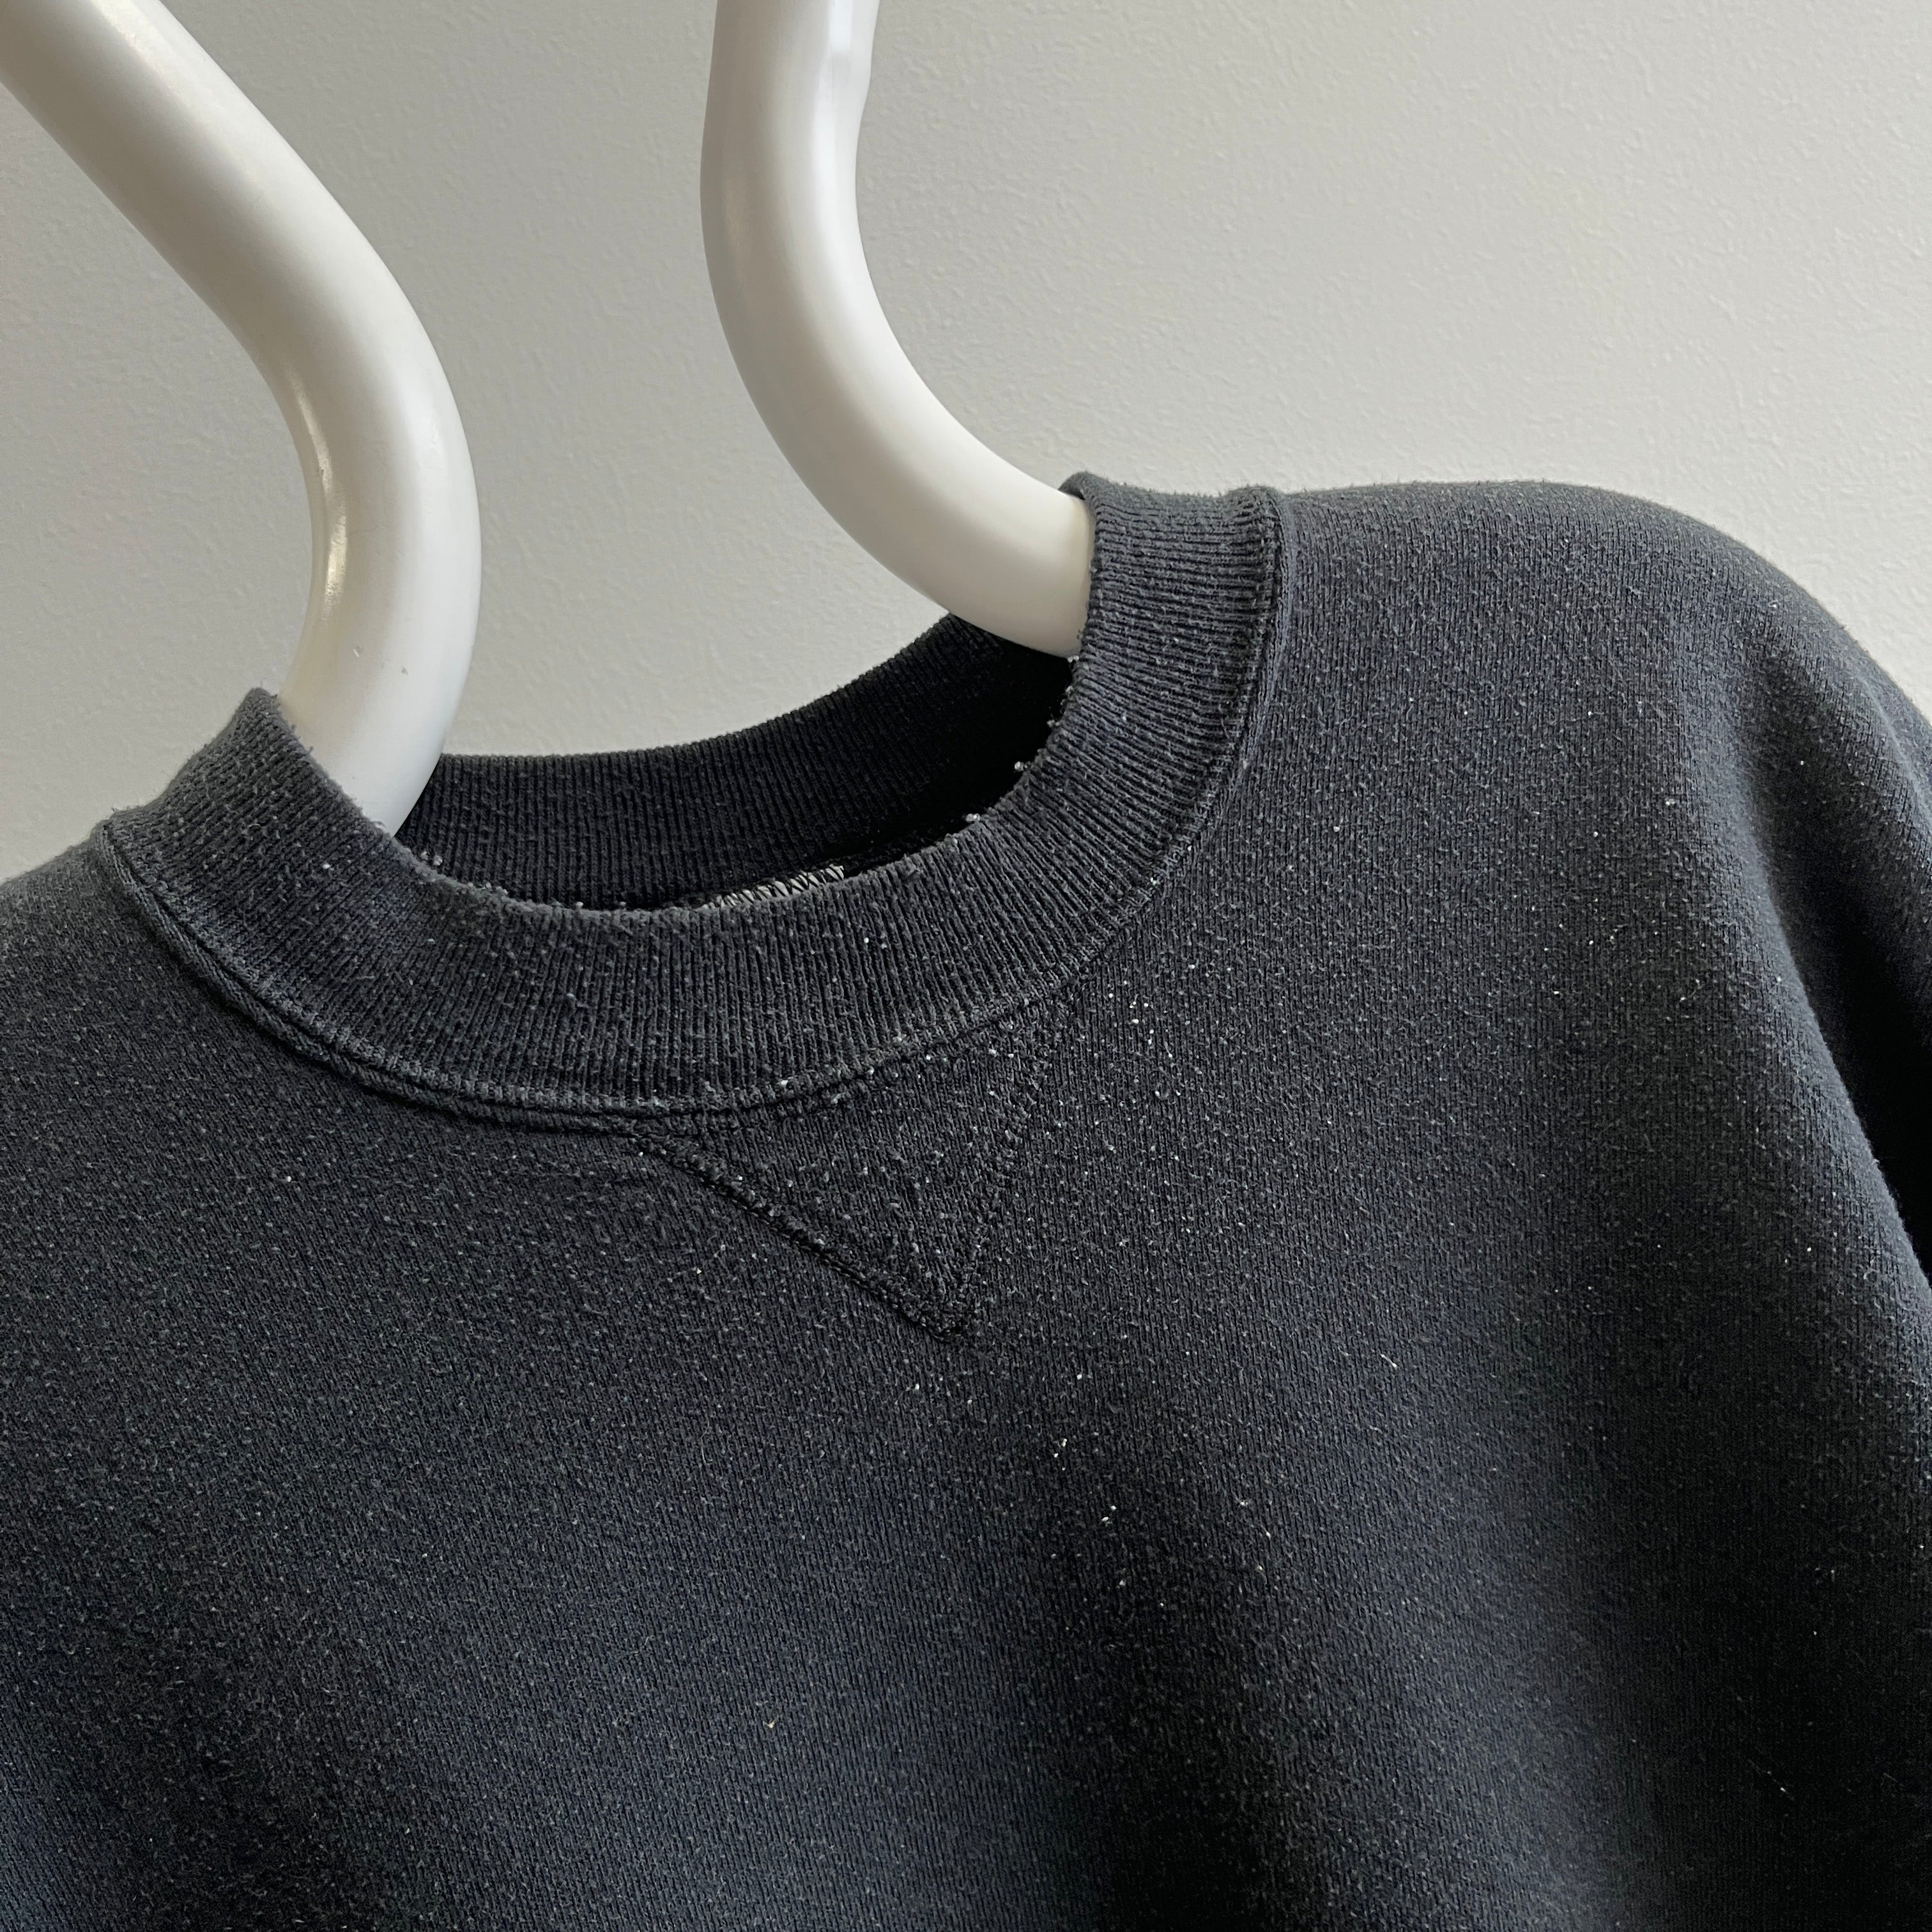 1980s Blank Black Russell Brand Single V Sweatshirt